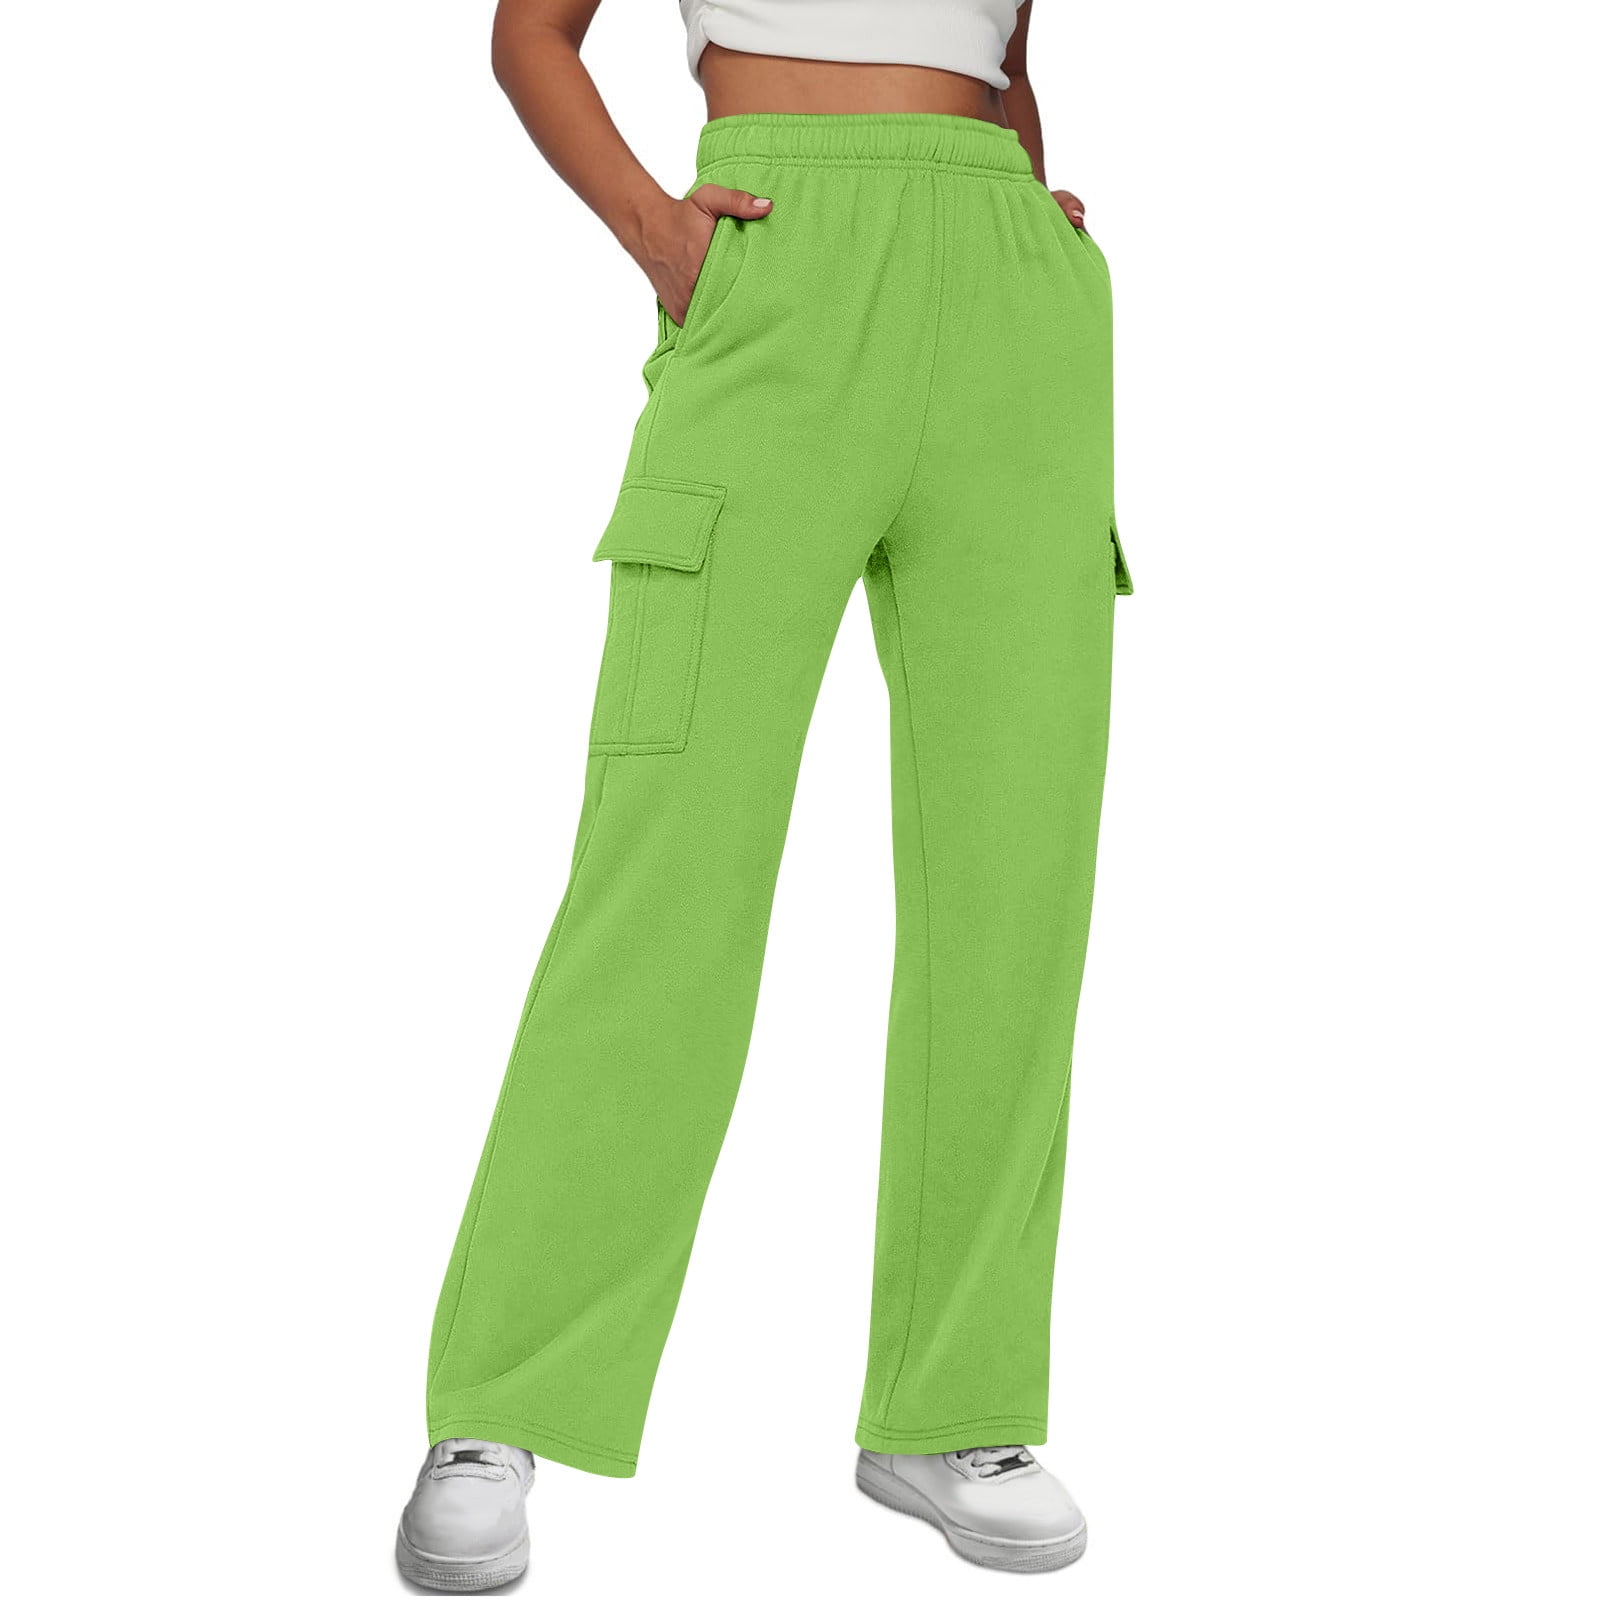 Huaai Women's Bottom Sweatpants Joggers Pants Workout High Waisted Yoga  Pants With Pockets Plus Size Pants For Women Green XXL 